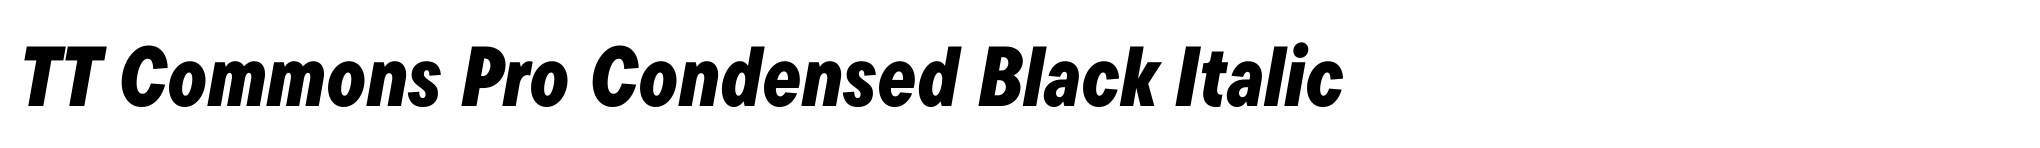 TT Commons Pro Condensed Black Italic image